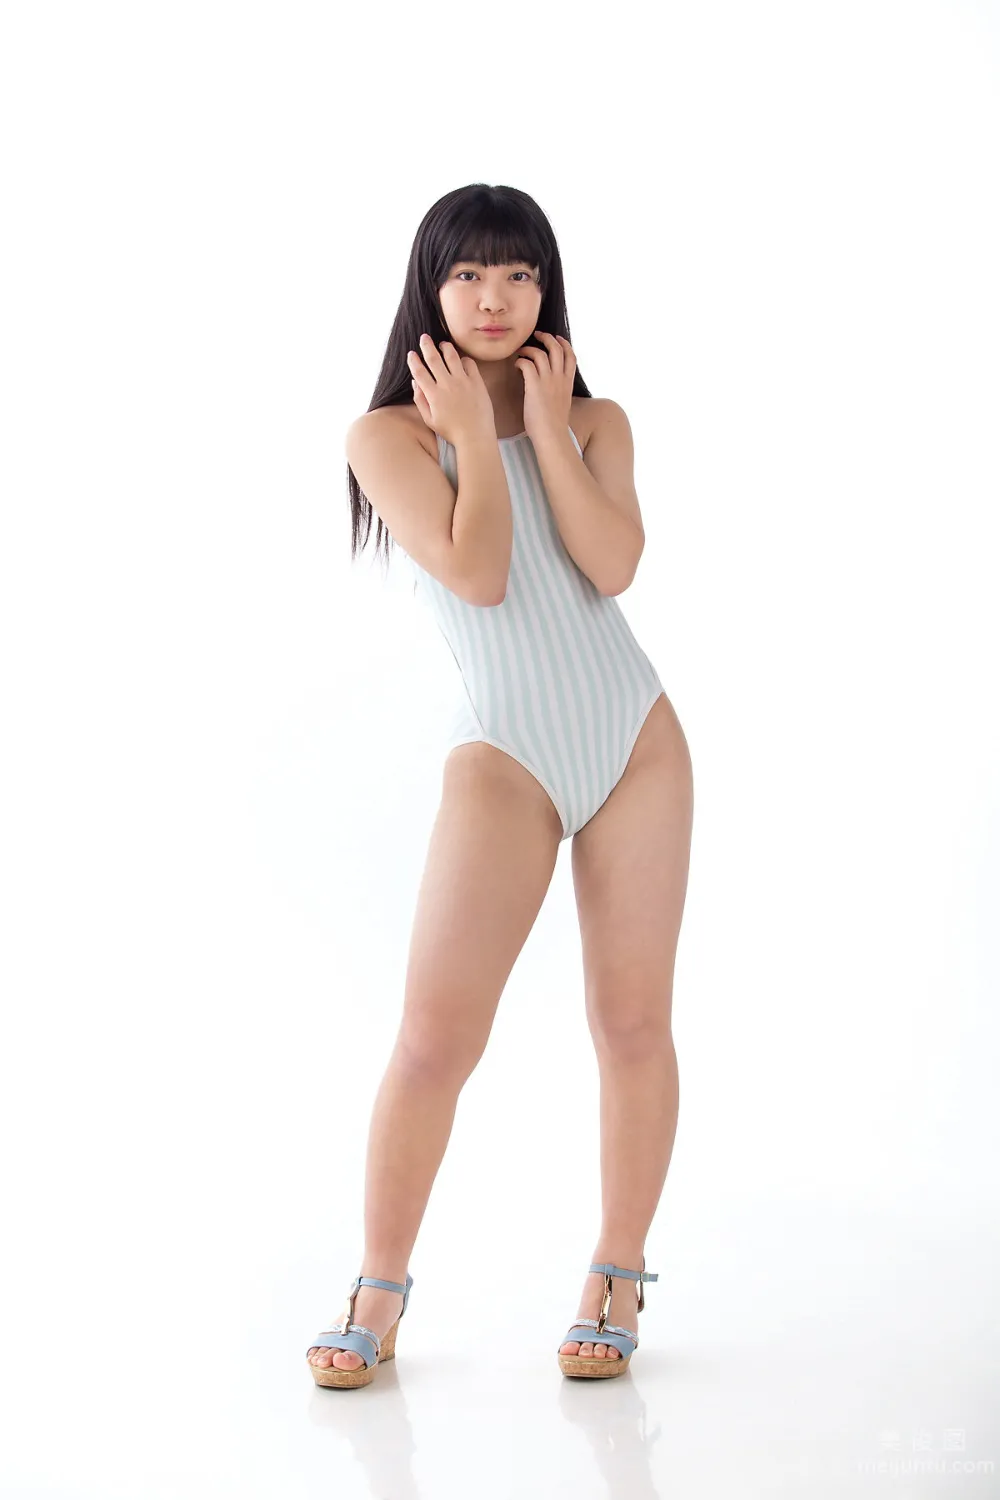 [Minisuka.tv] Saria Natsume 夏目咲莉愛 - Premium Gallery 3.113